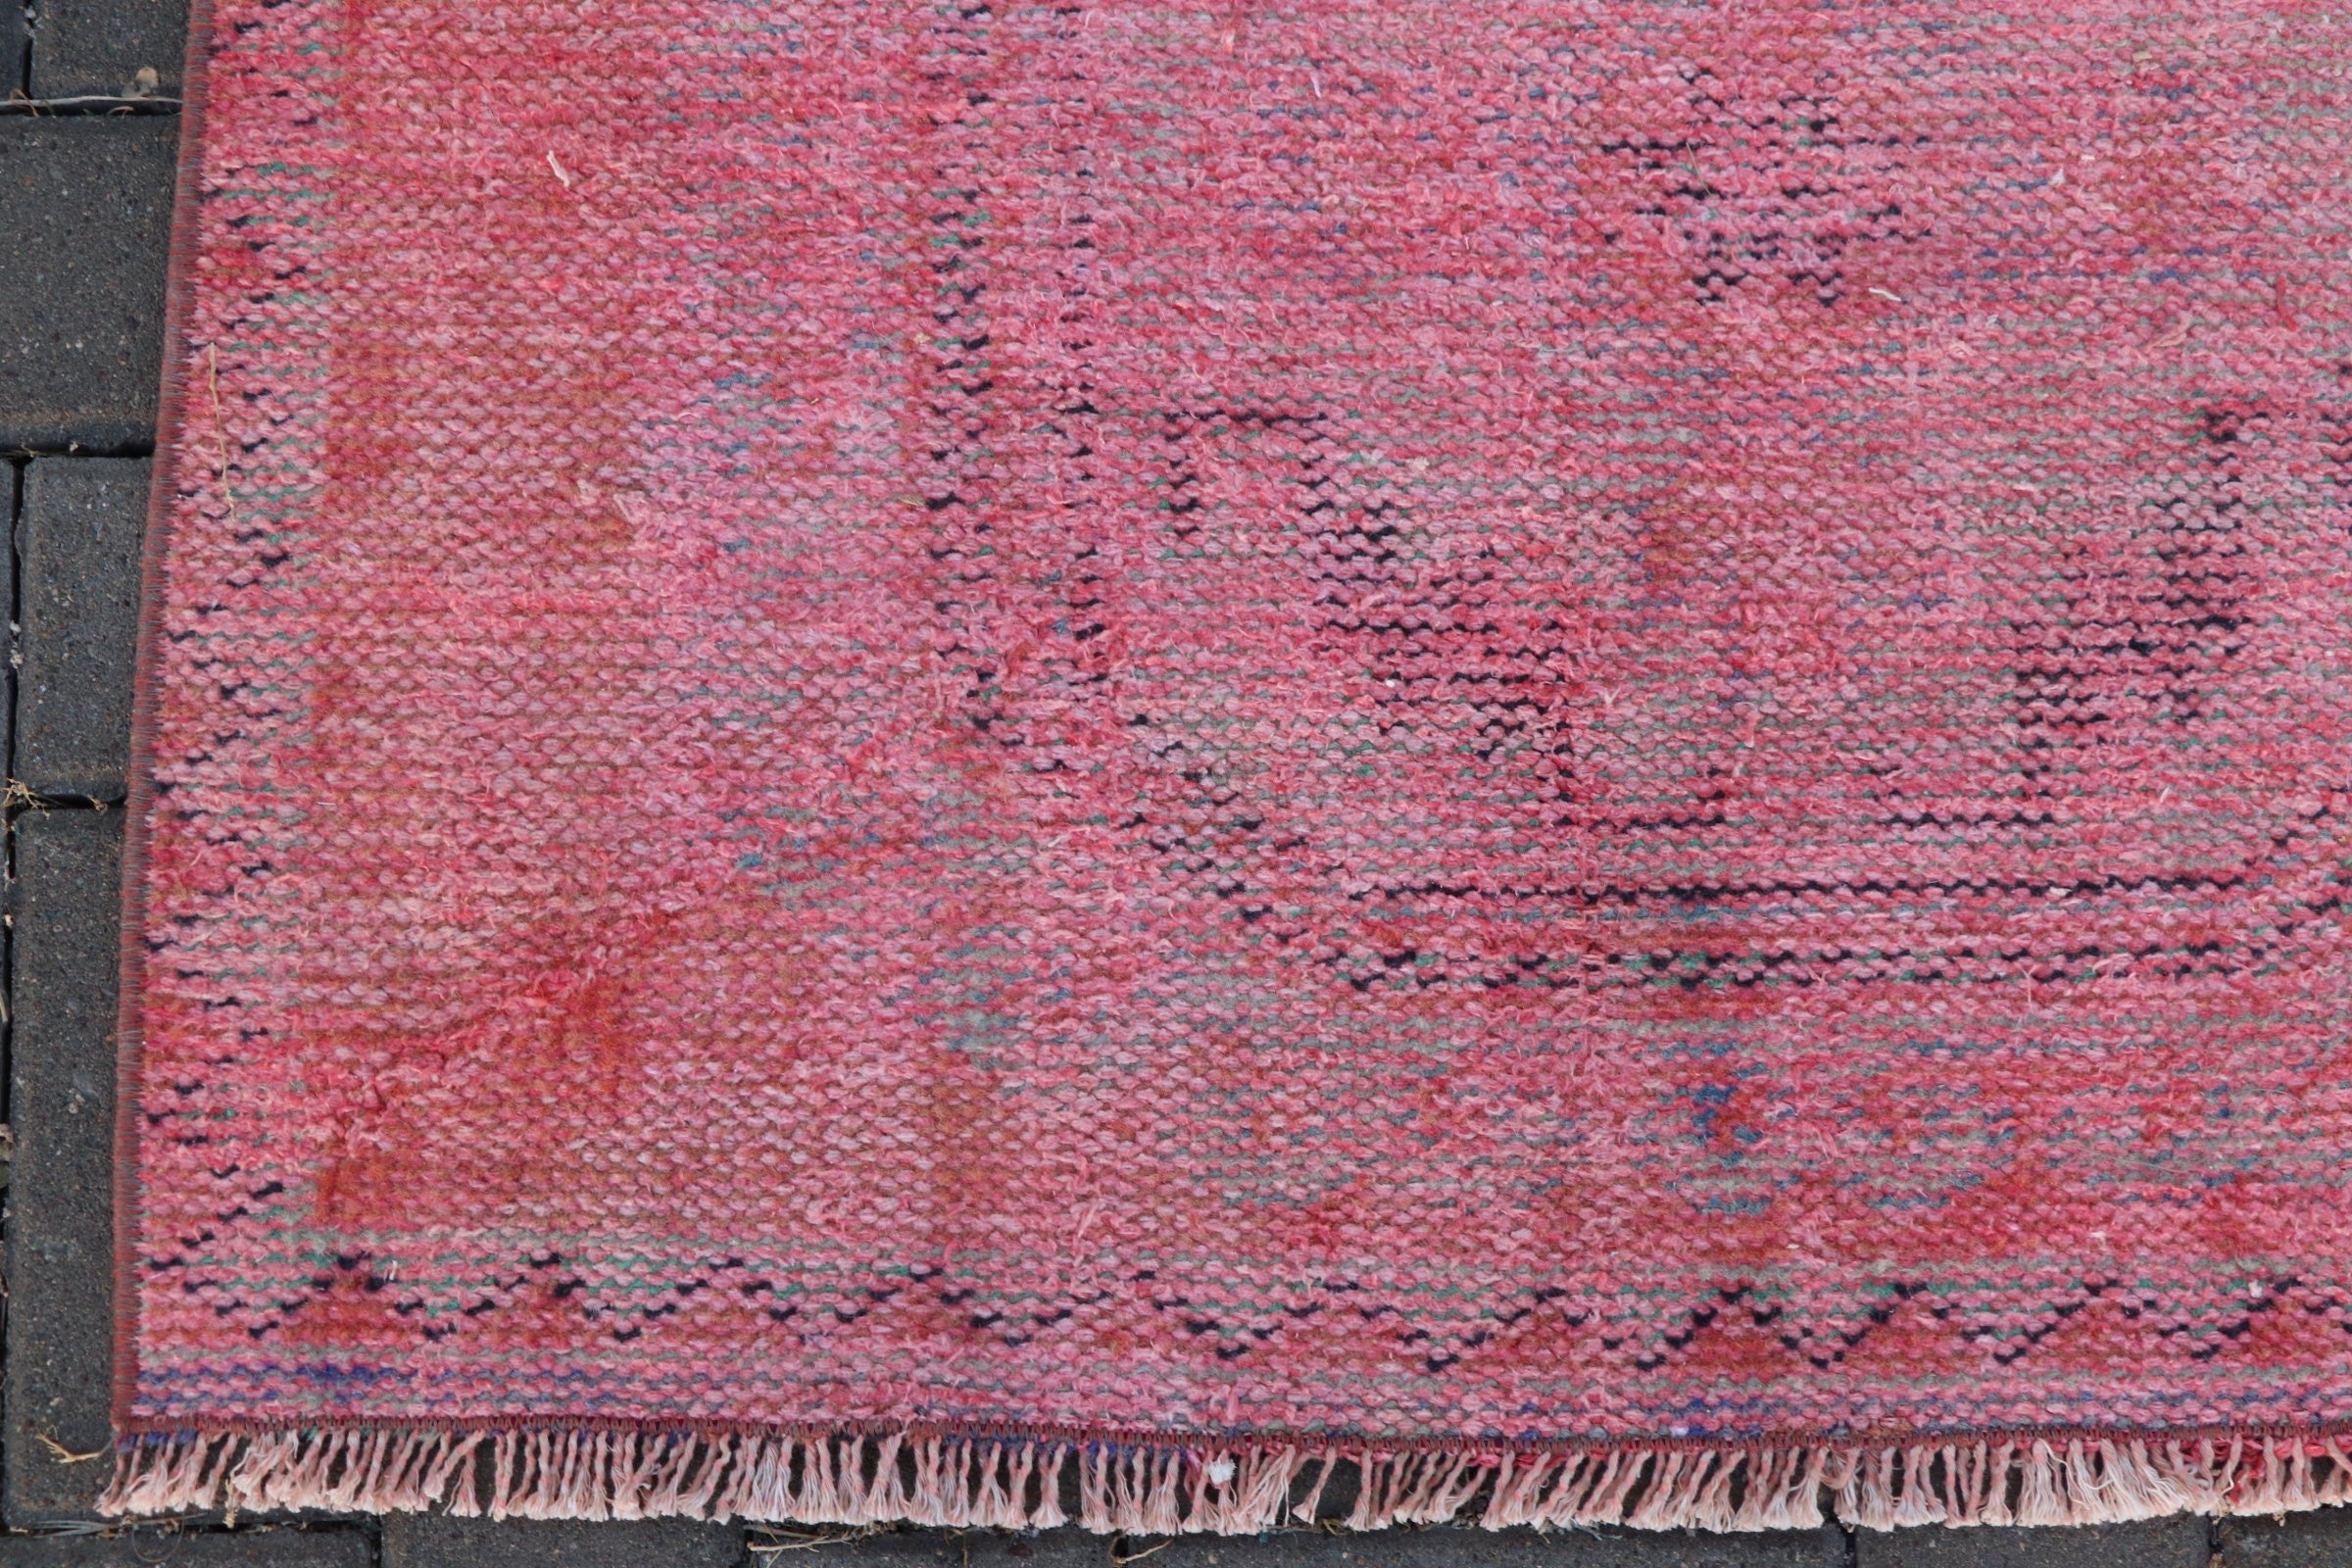 Art Rug, Vintage Rug, Moroccan Rug, Rugs for Hallway, Kitchen Rug, Wool Rug, Pink Antique Rug, Stair Rug, Turkish Rug, 3.1x11 ft Runner Rug